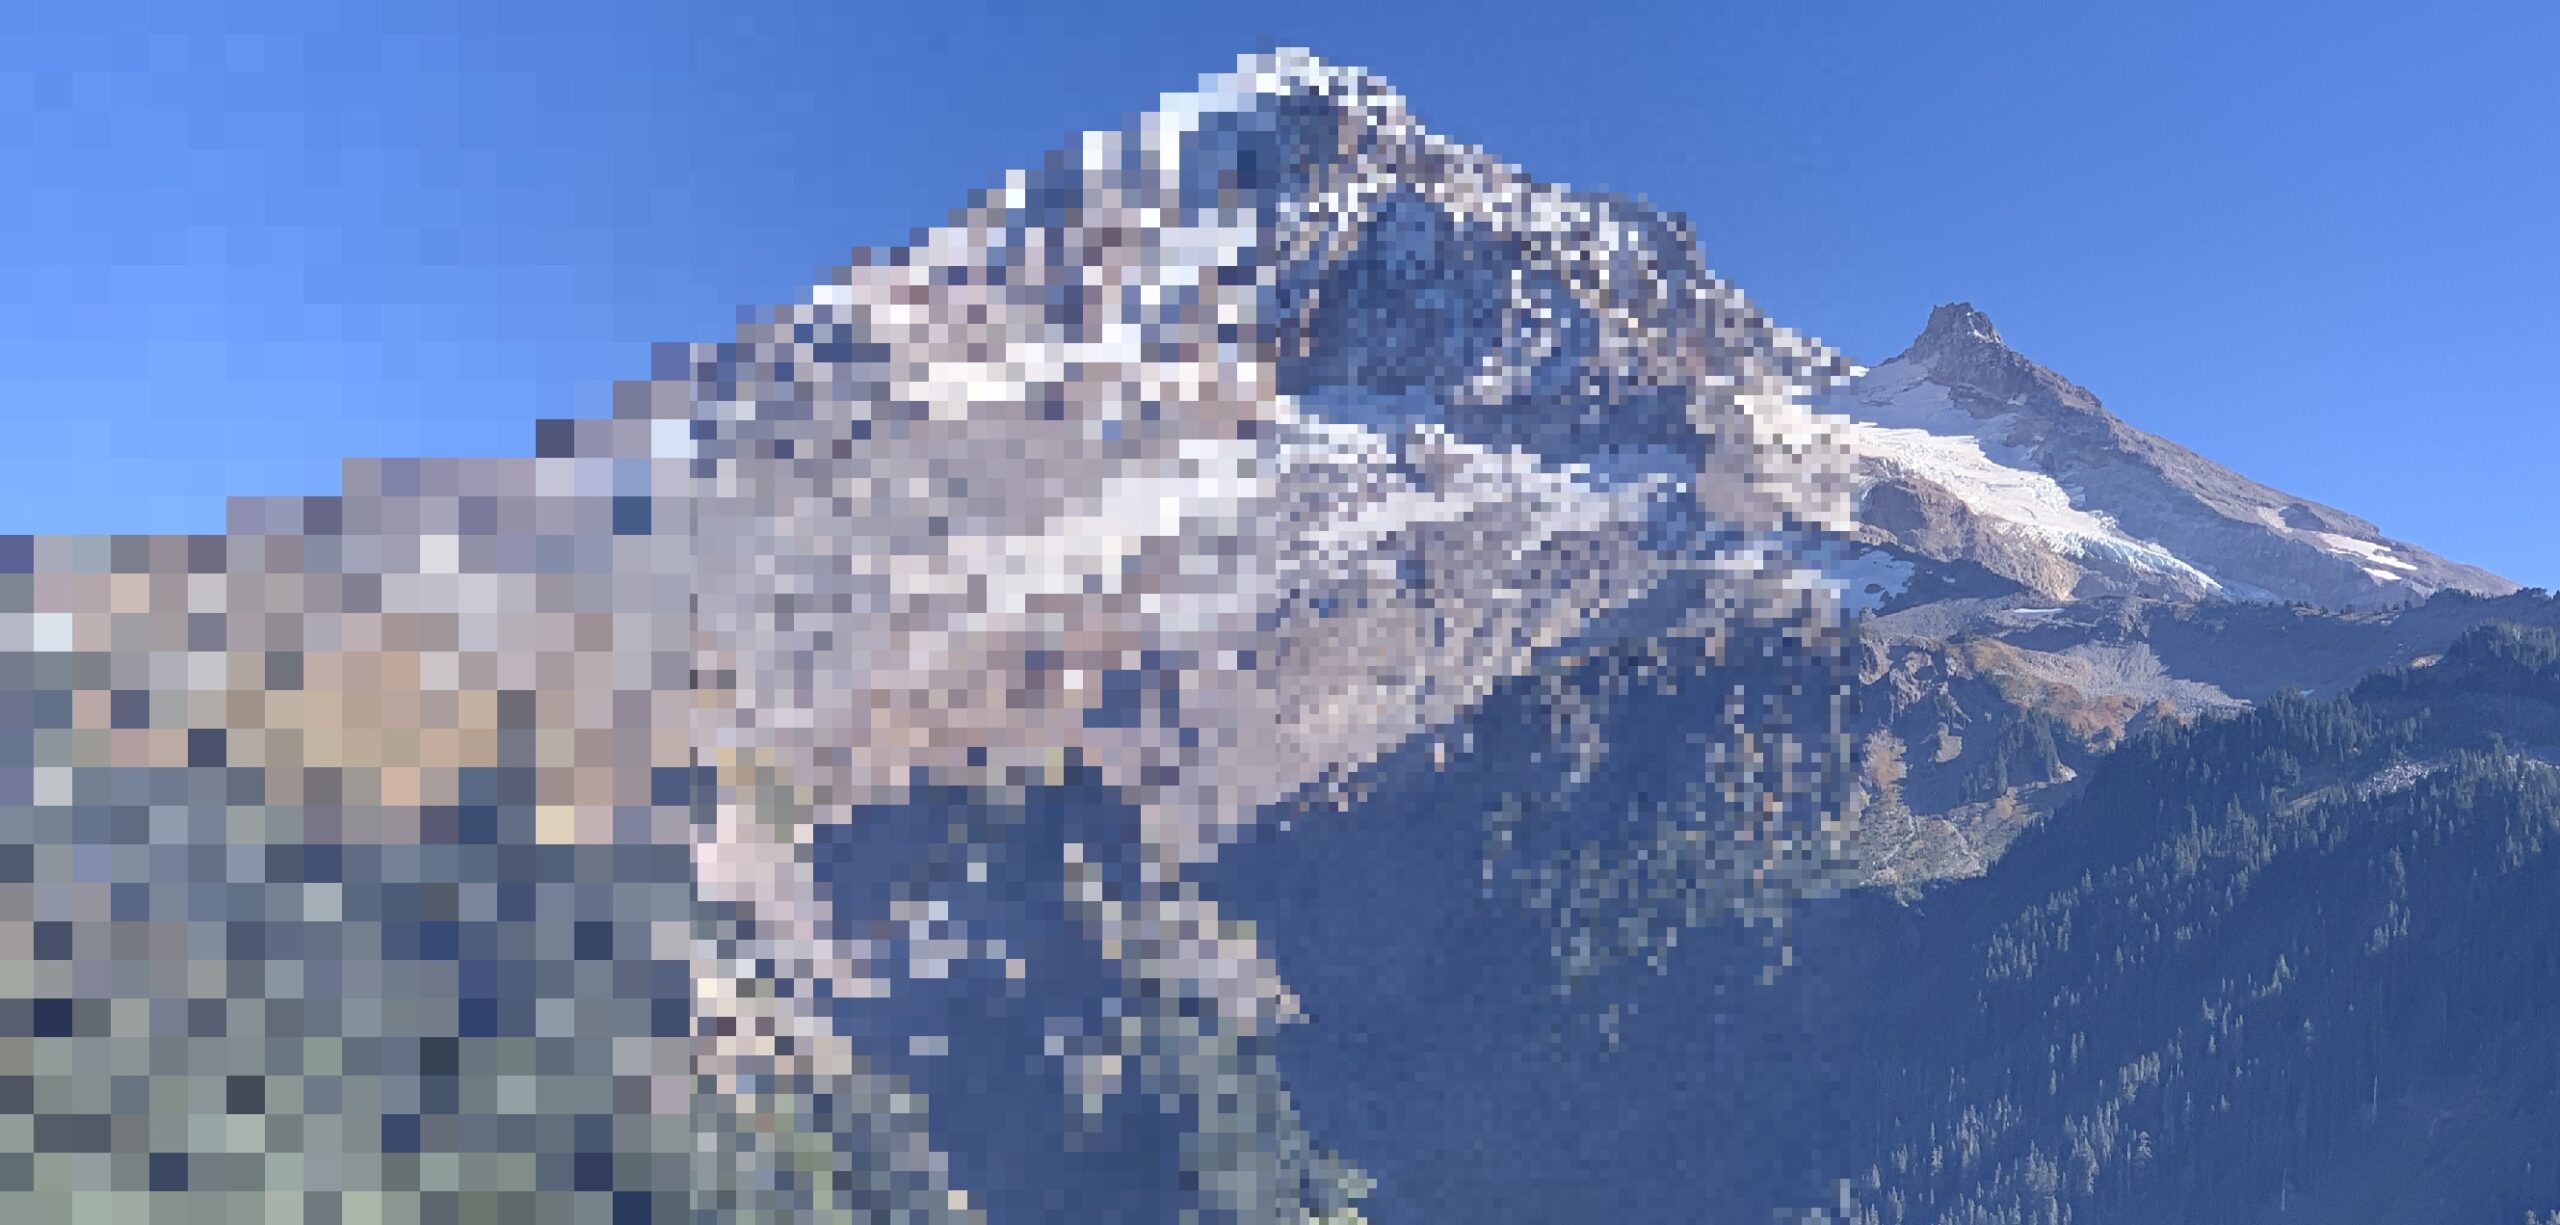 Mountain image showing pixelation